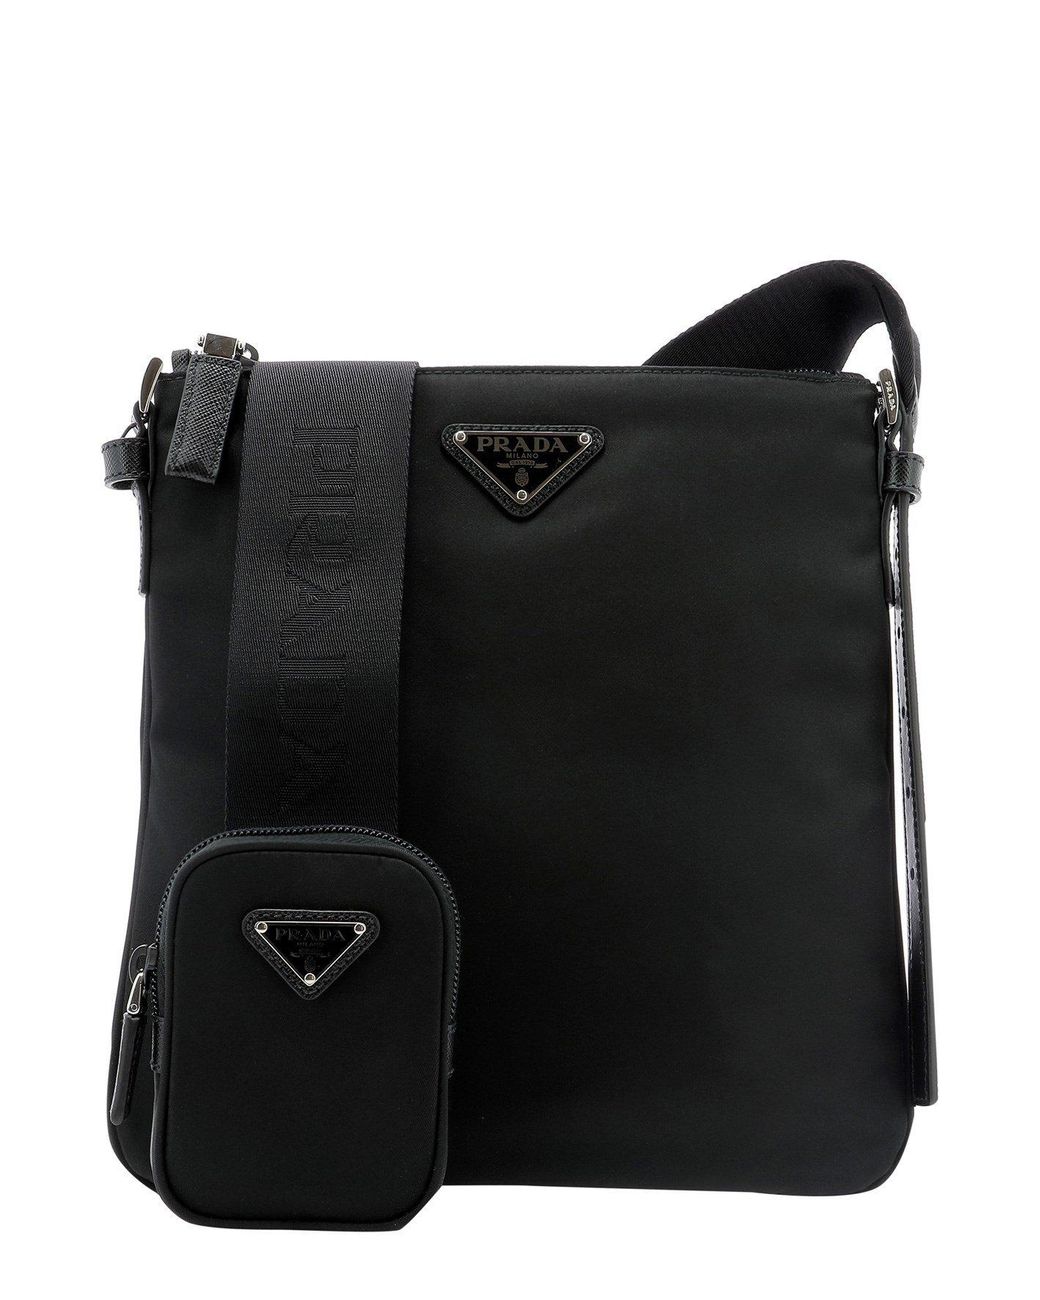 Prada Synthetic Re-nylon Pouch Shoulder Bag in Black for Men - Lyst